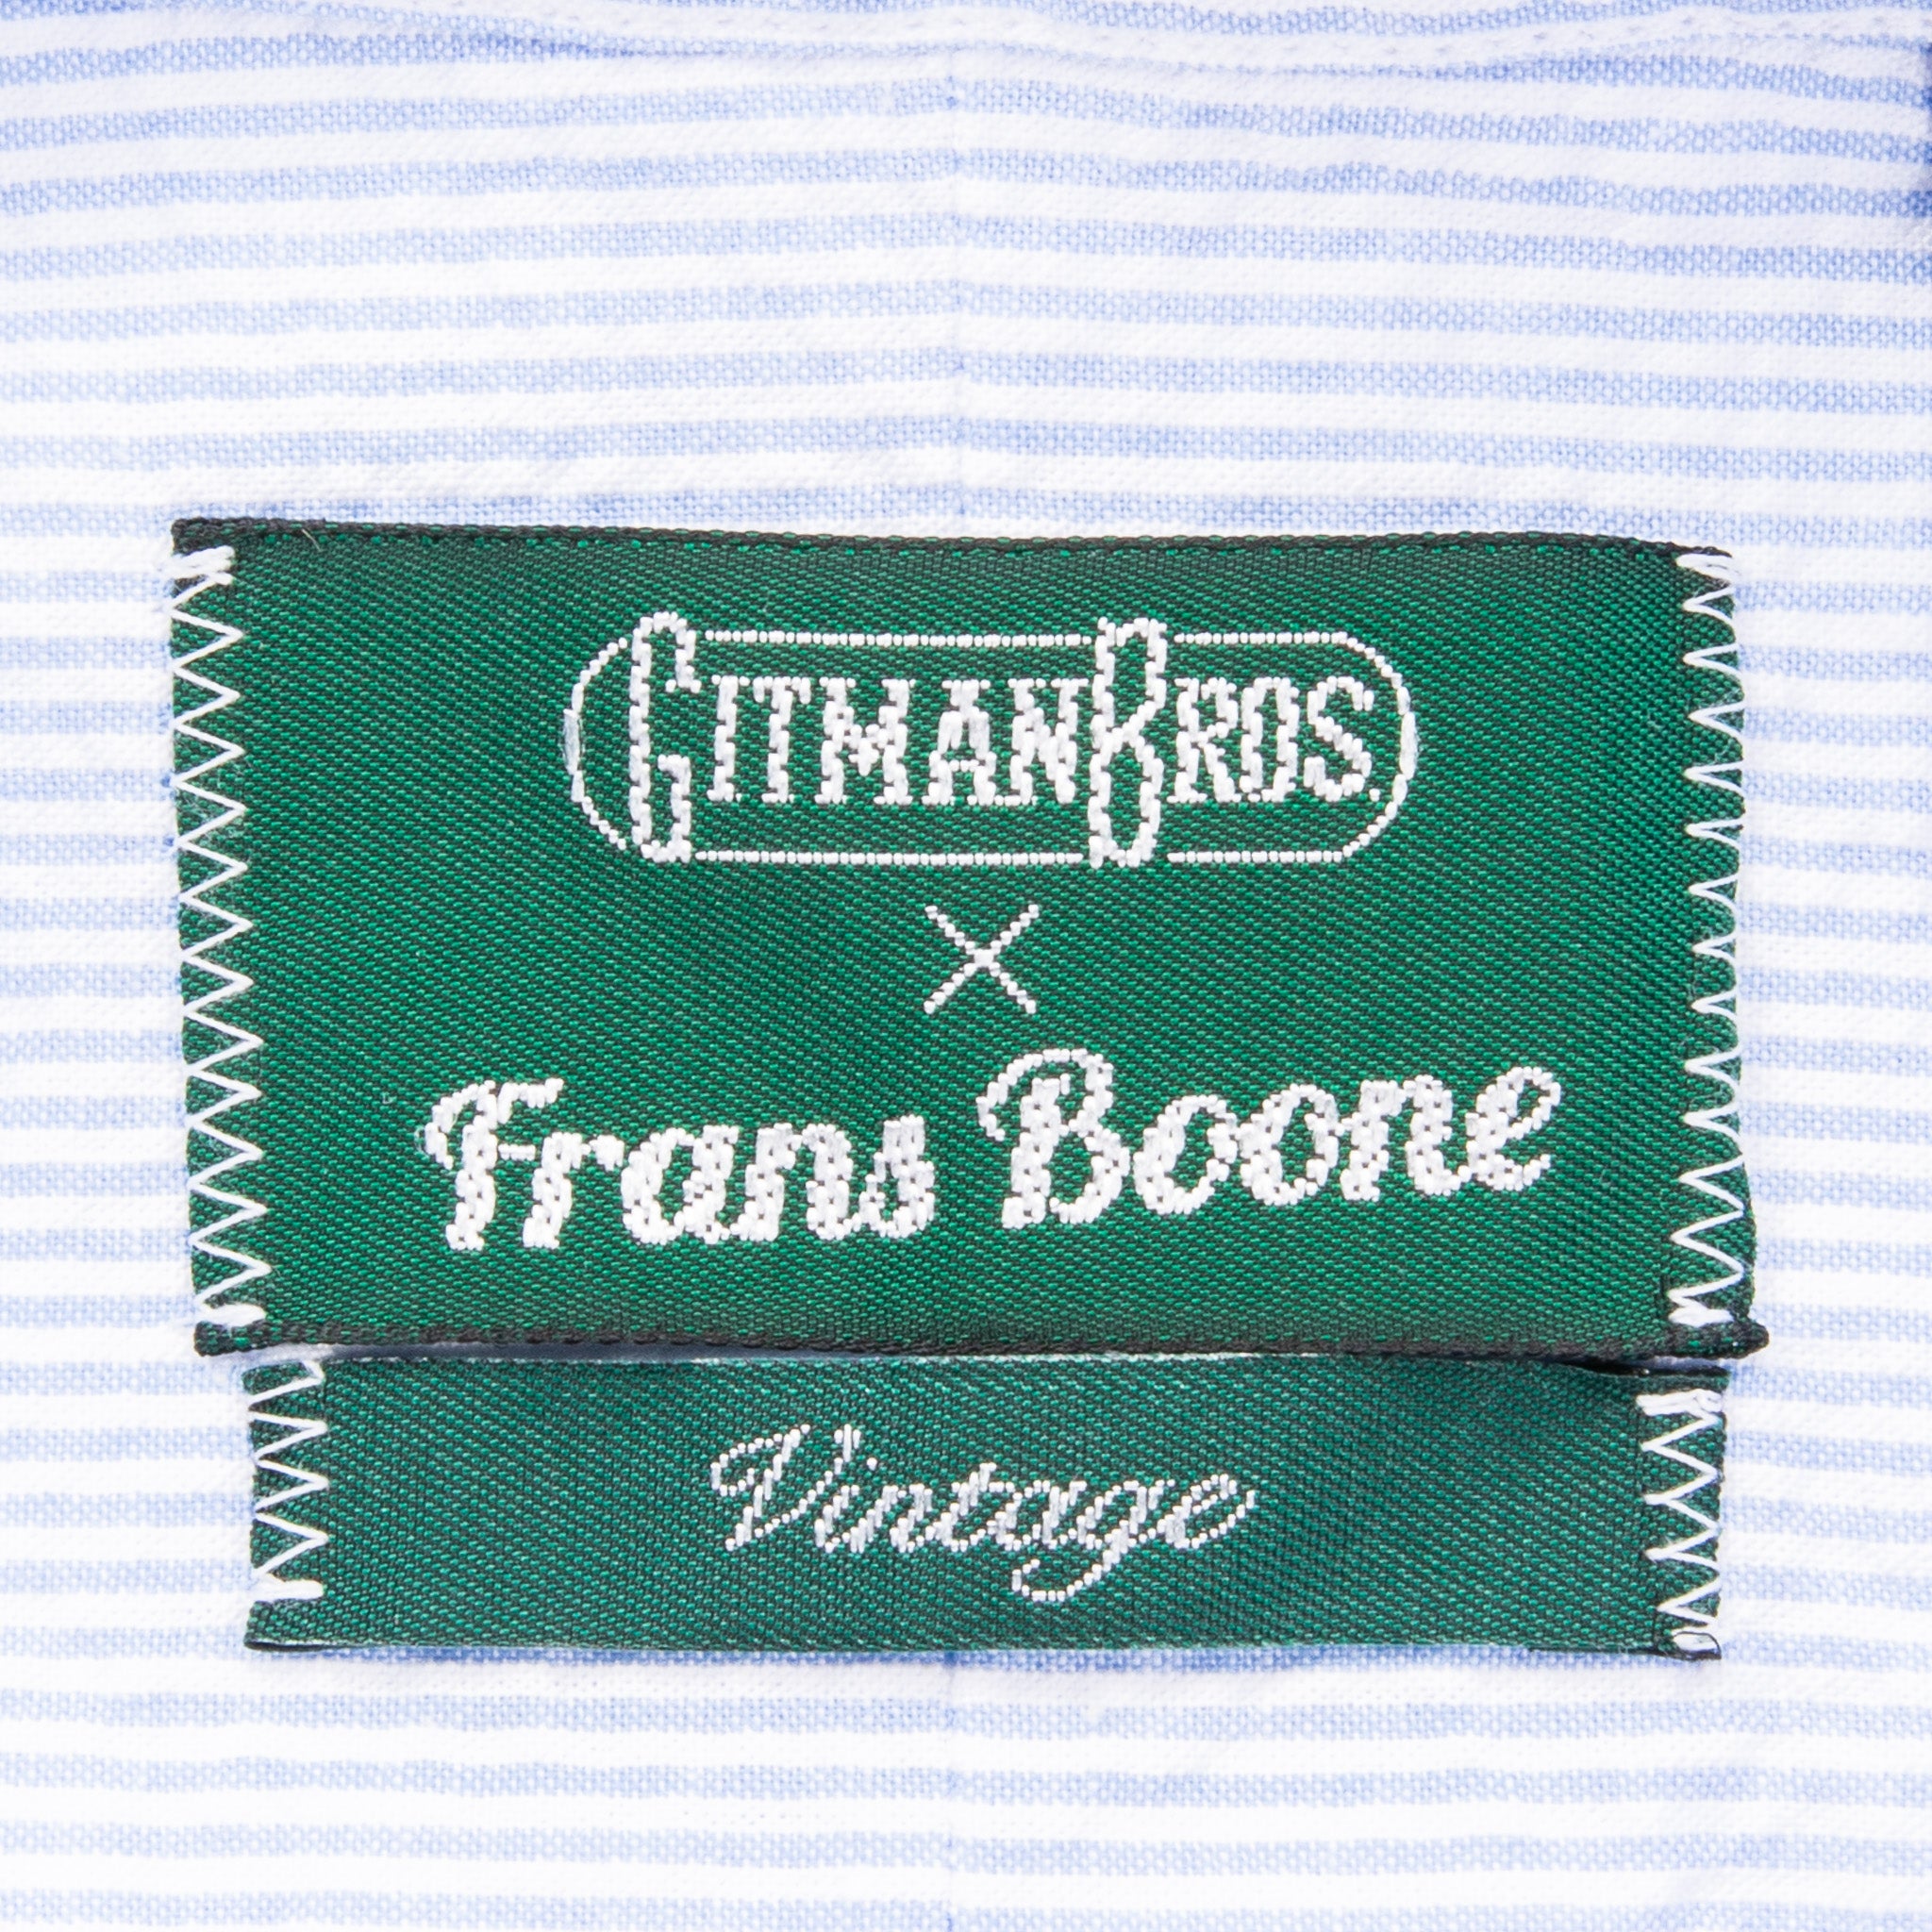 Gitman Vintage x Frans Boone Japanese woven stripe seersucker light blue